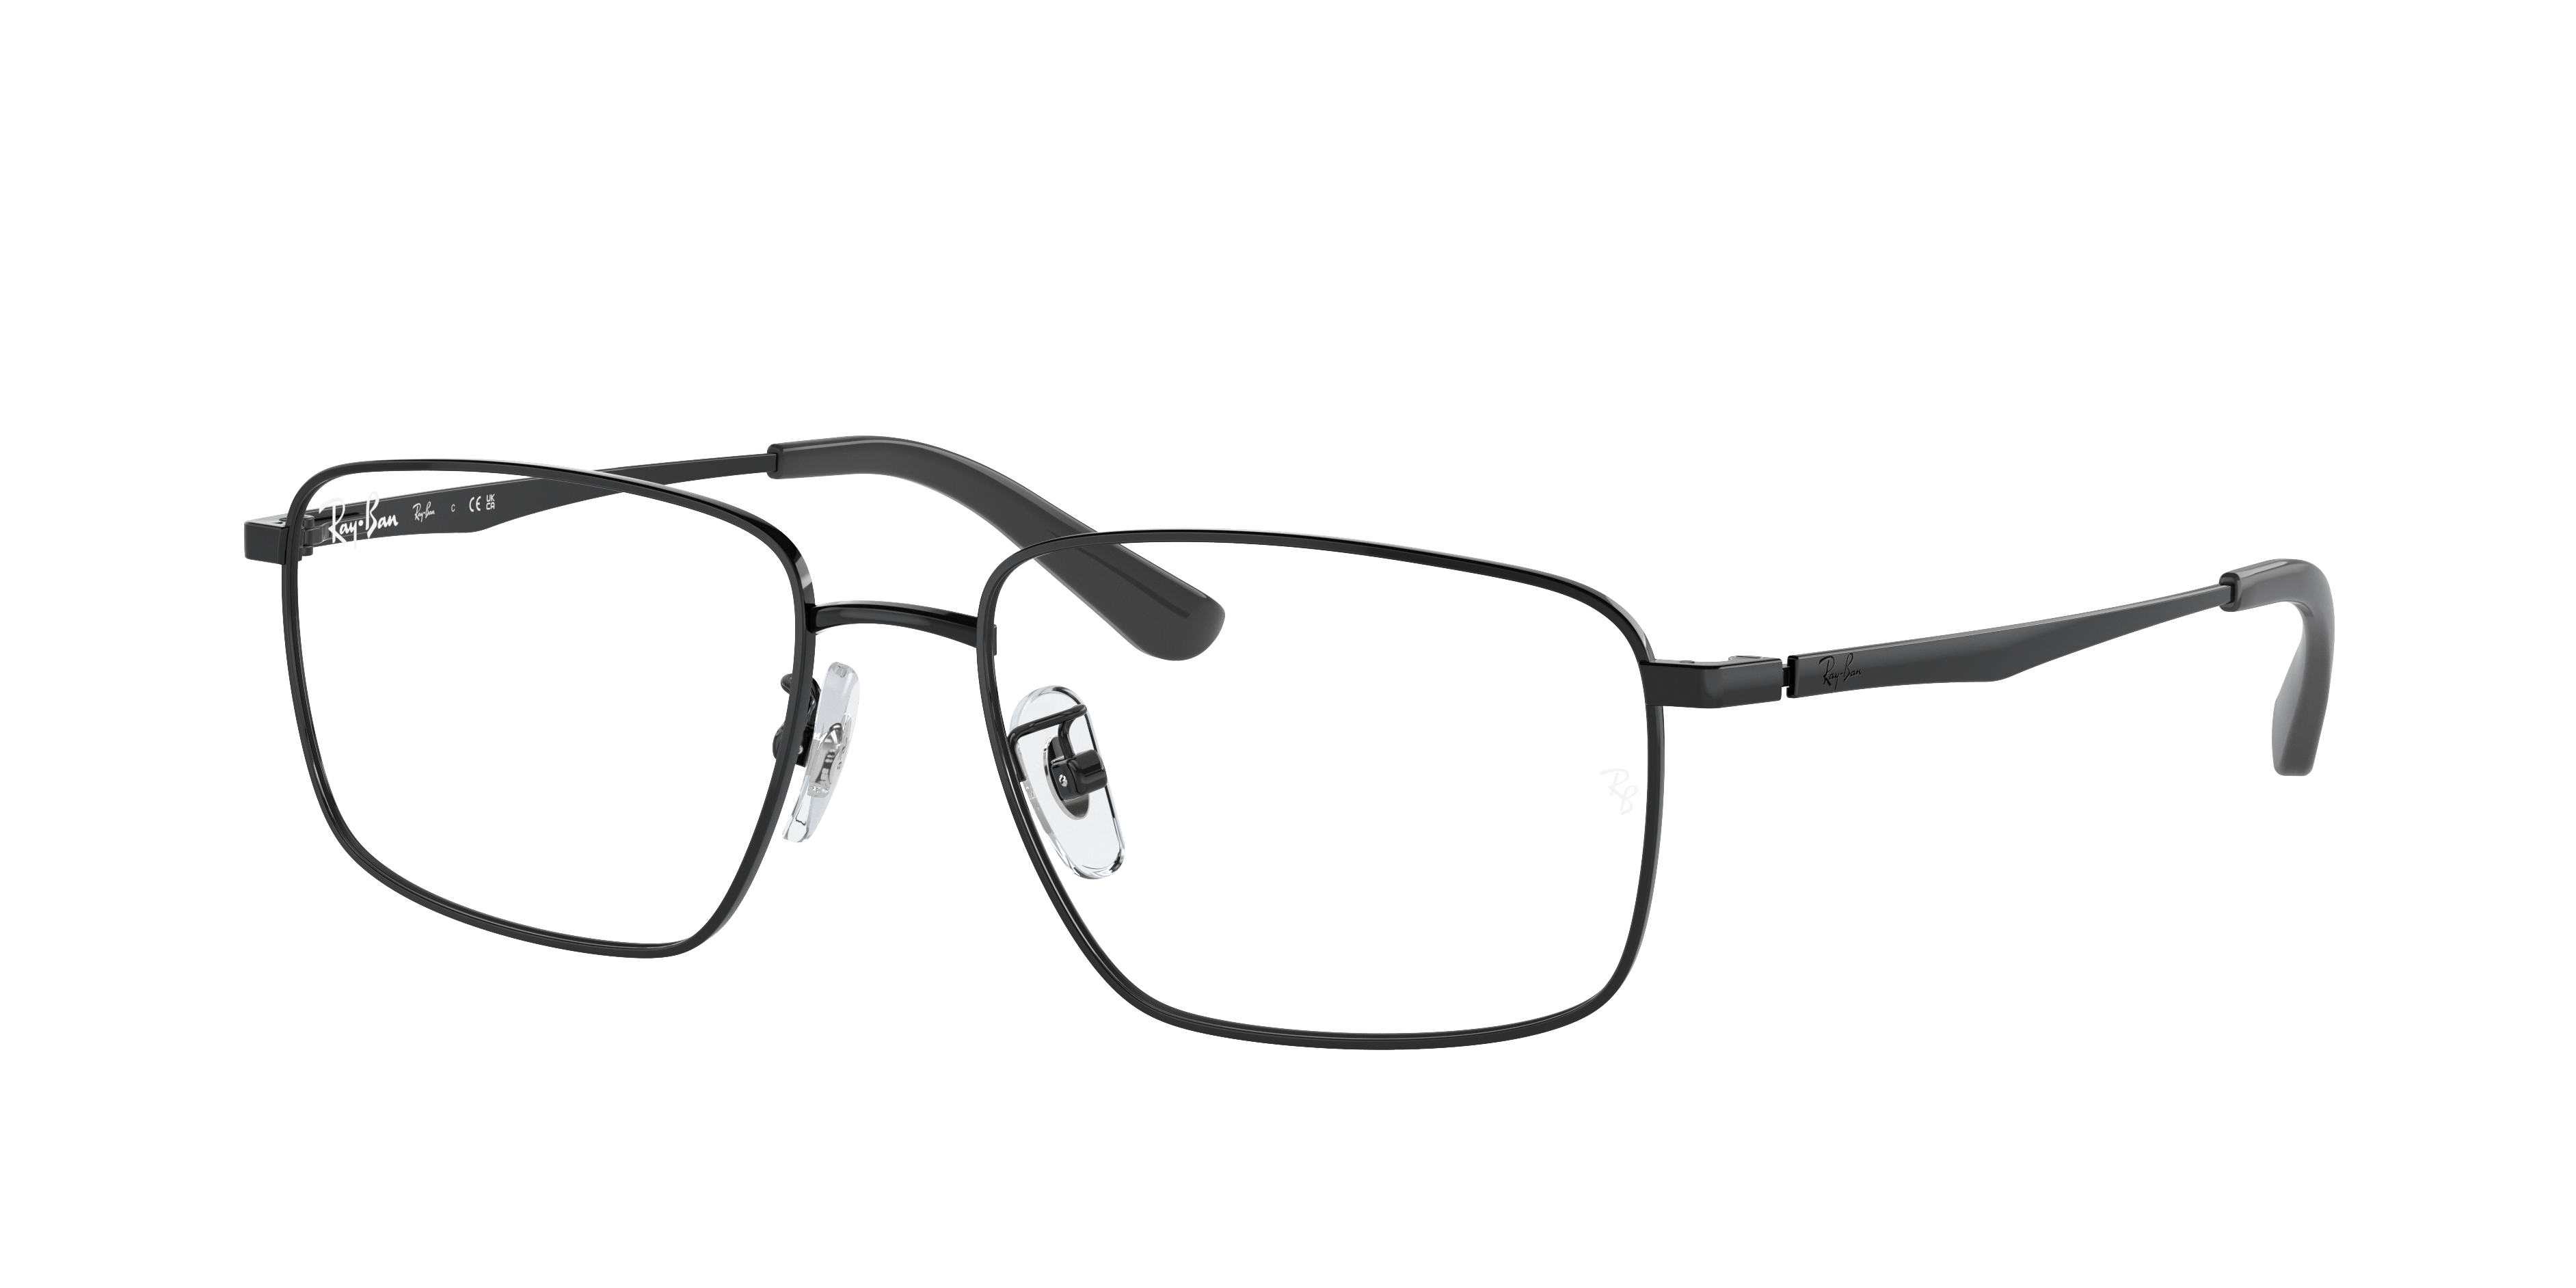 Rb6524d Optics Eyeglasses with Black Frame - RB6524D | Ray-Ban®